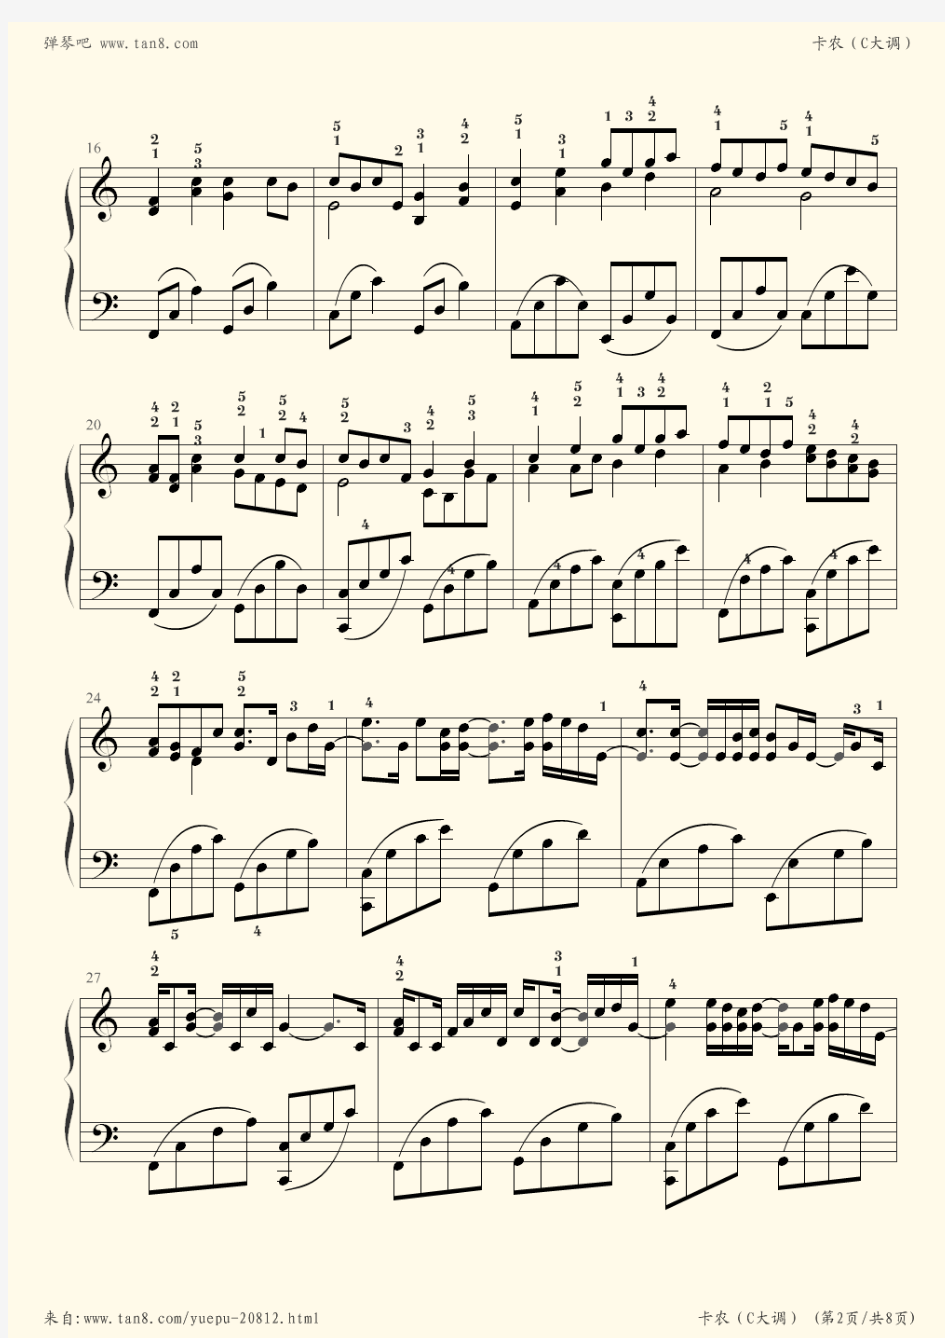 NO.2 卡农(经典版,C大调钢琴谱,带指法) (1)